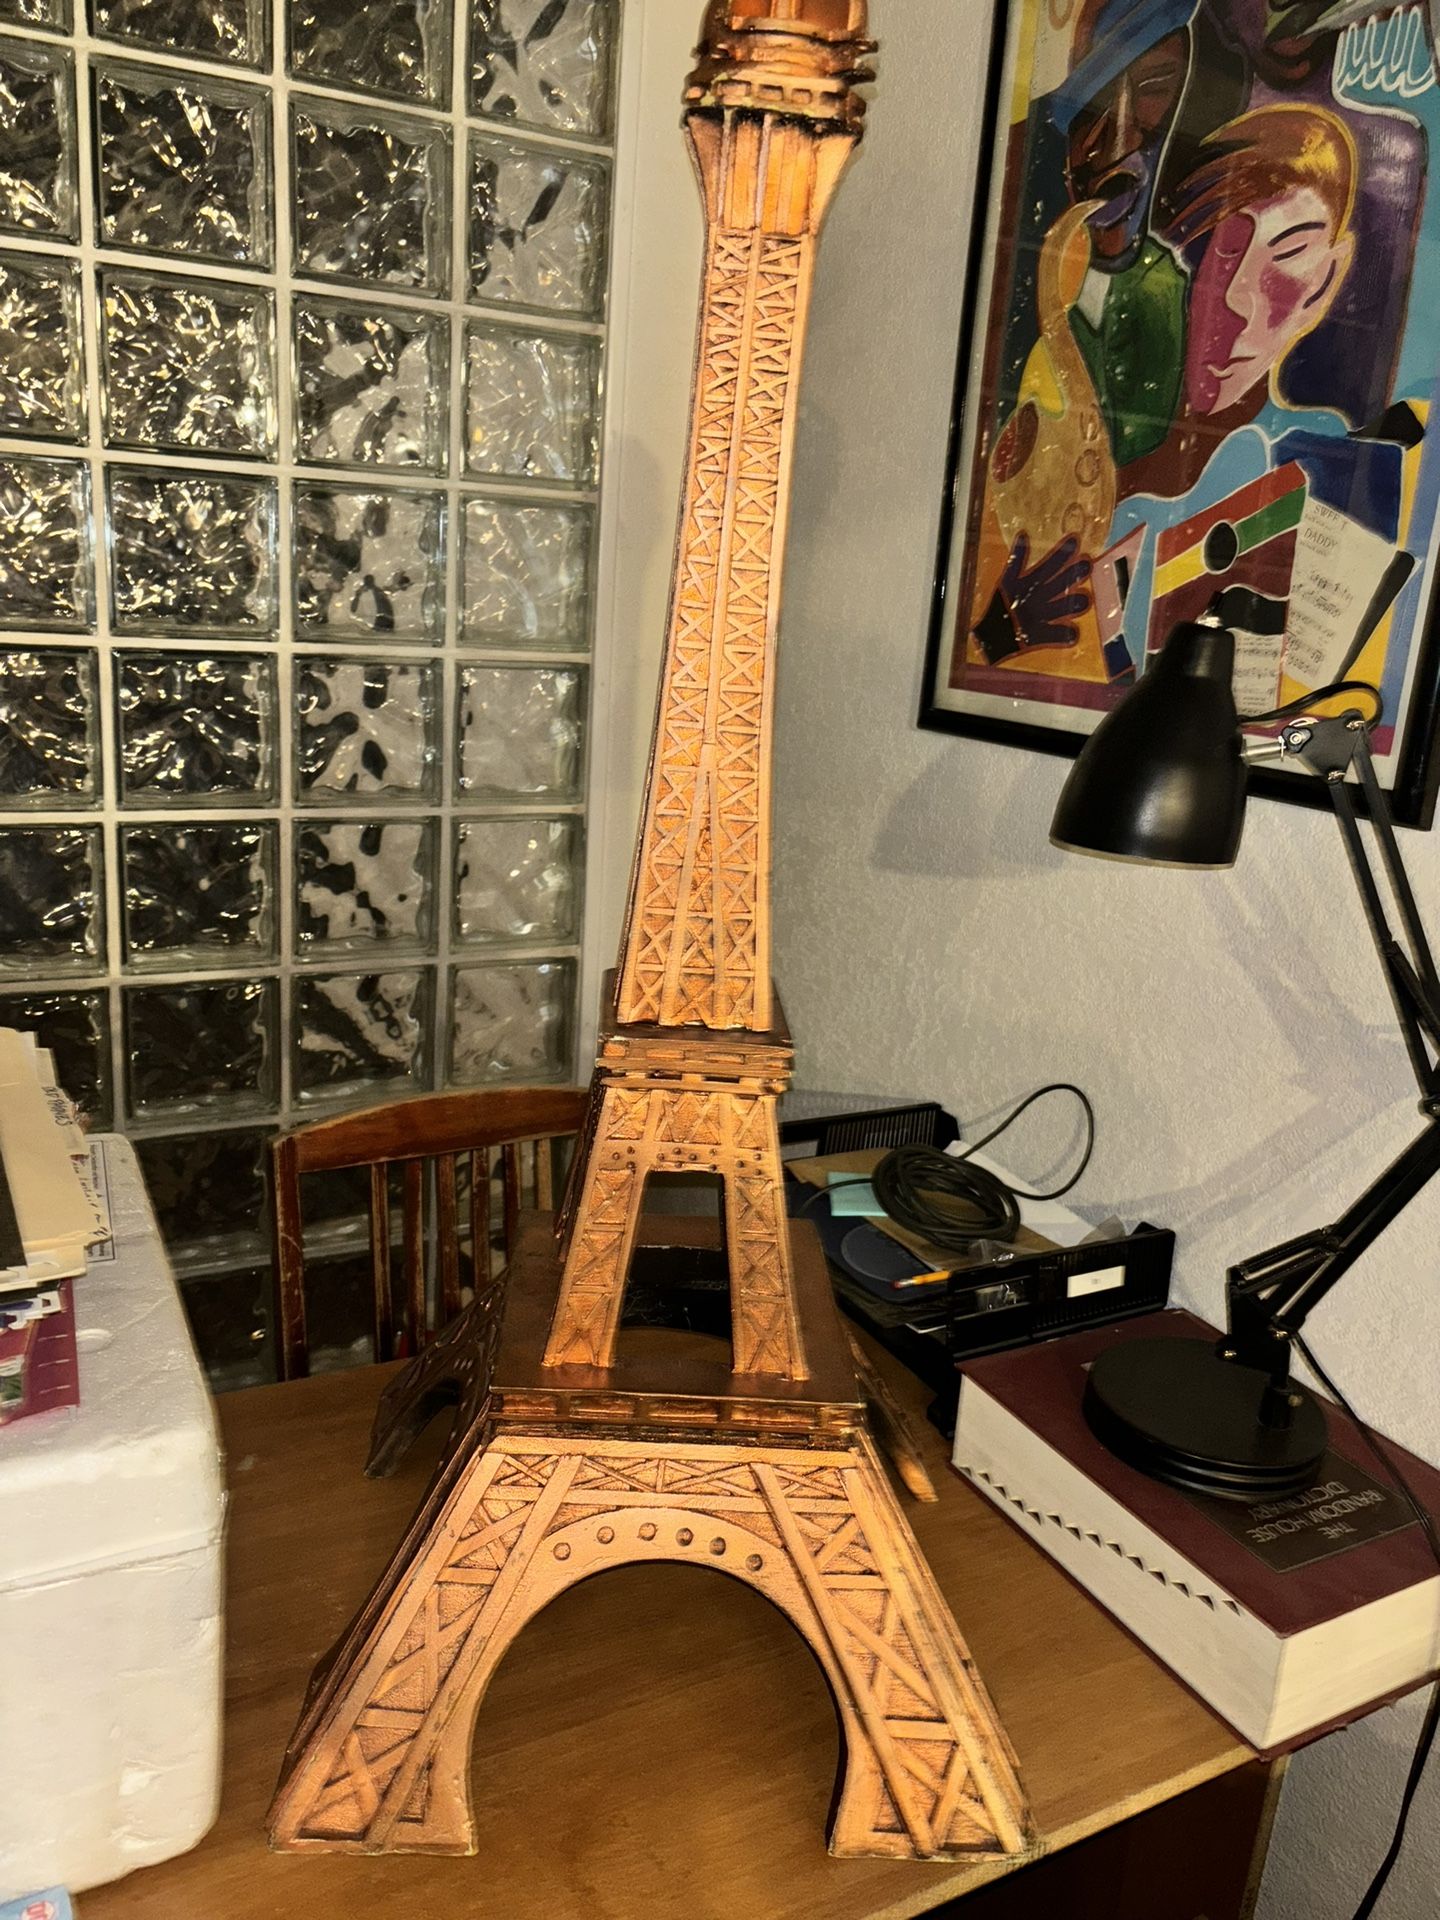 3 Ft Wooden Eiffel Tower Statue 